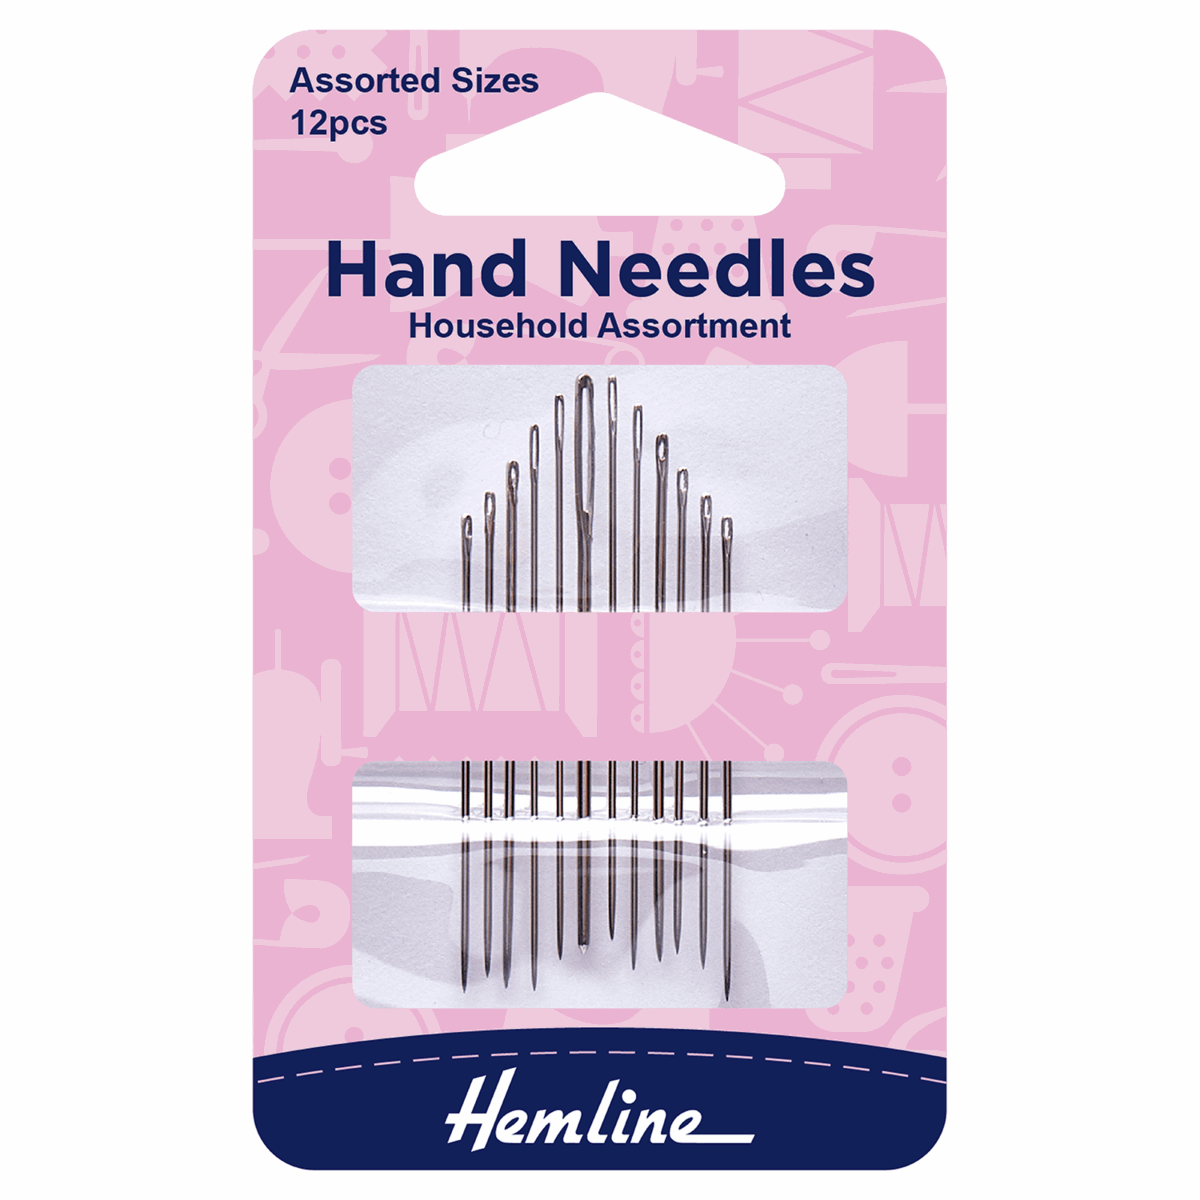 Hemline Hand Sewing Needles: Household Assortment - 12pcs